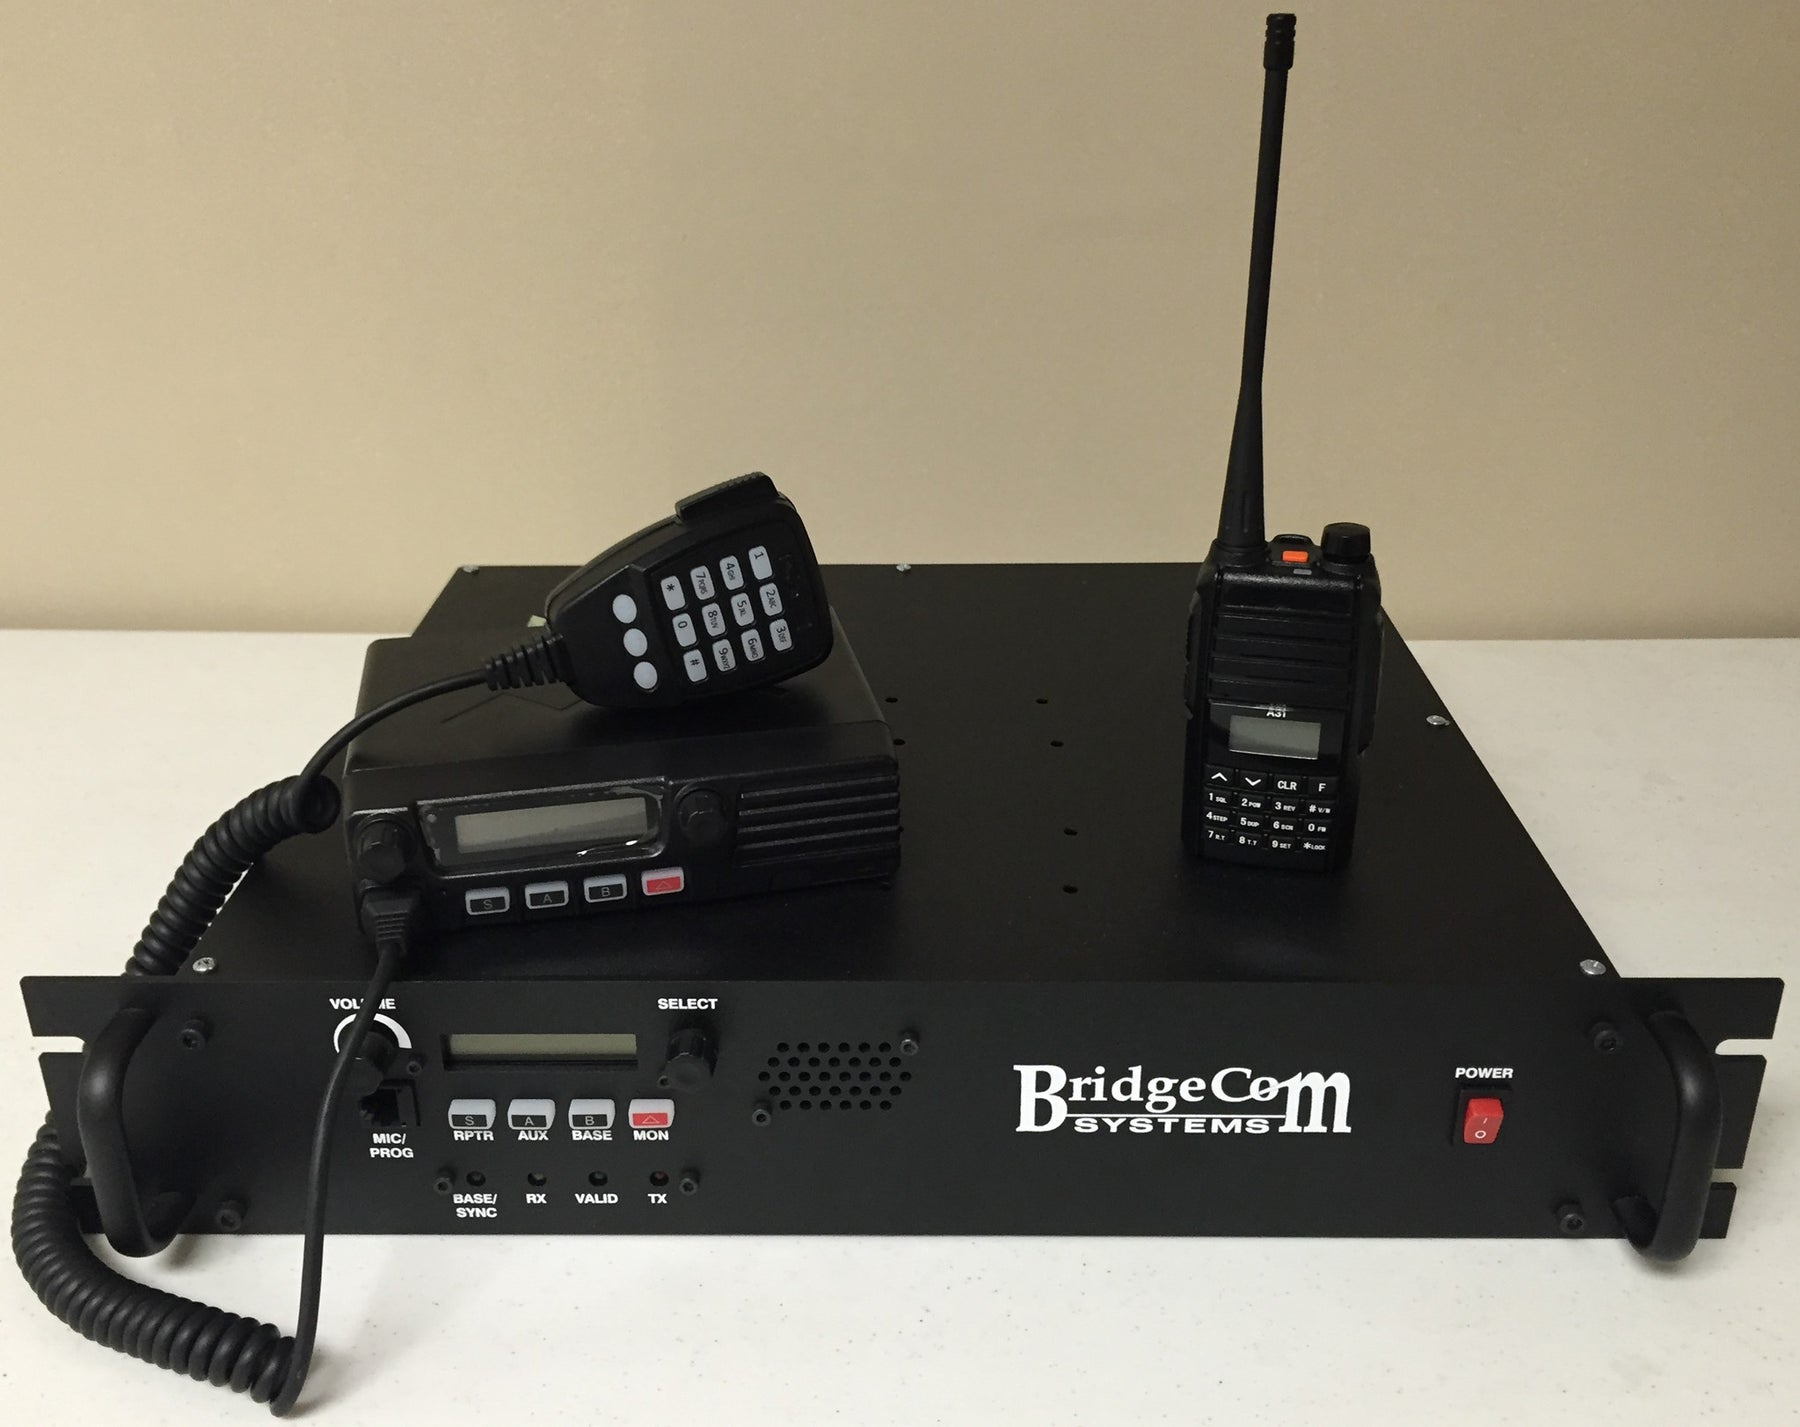 Why 220 MHz for Amateur Ham Radio, V2.0? — BridgeCom Systems